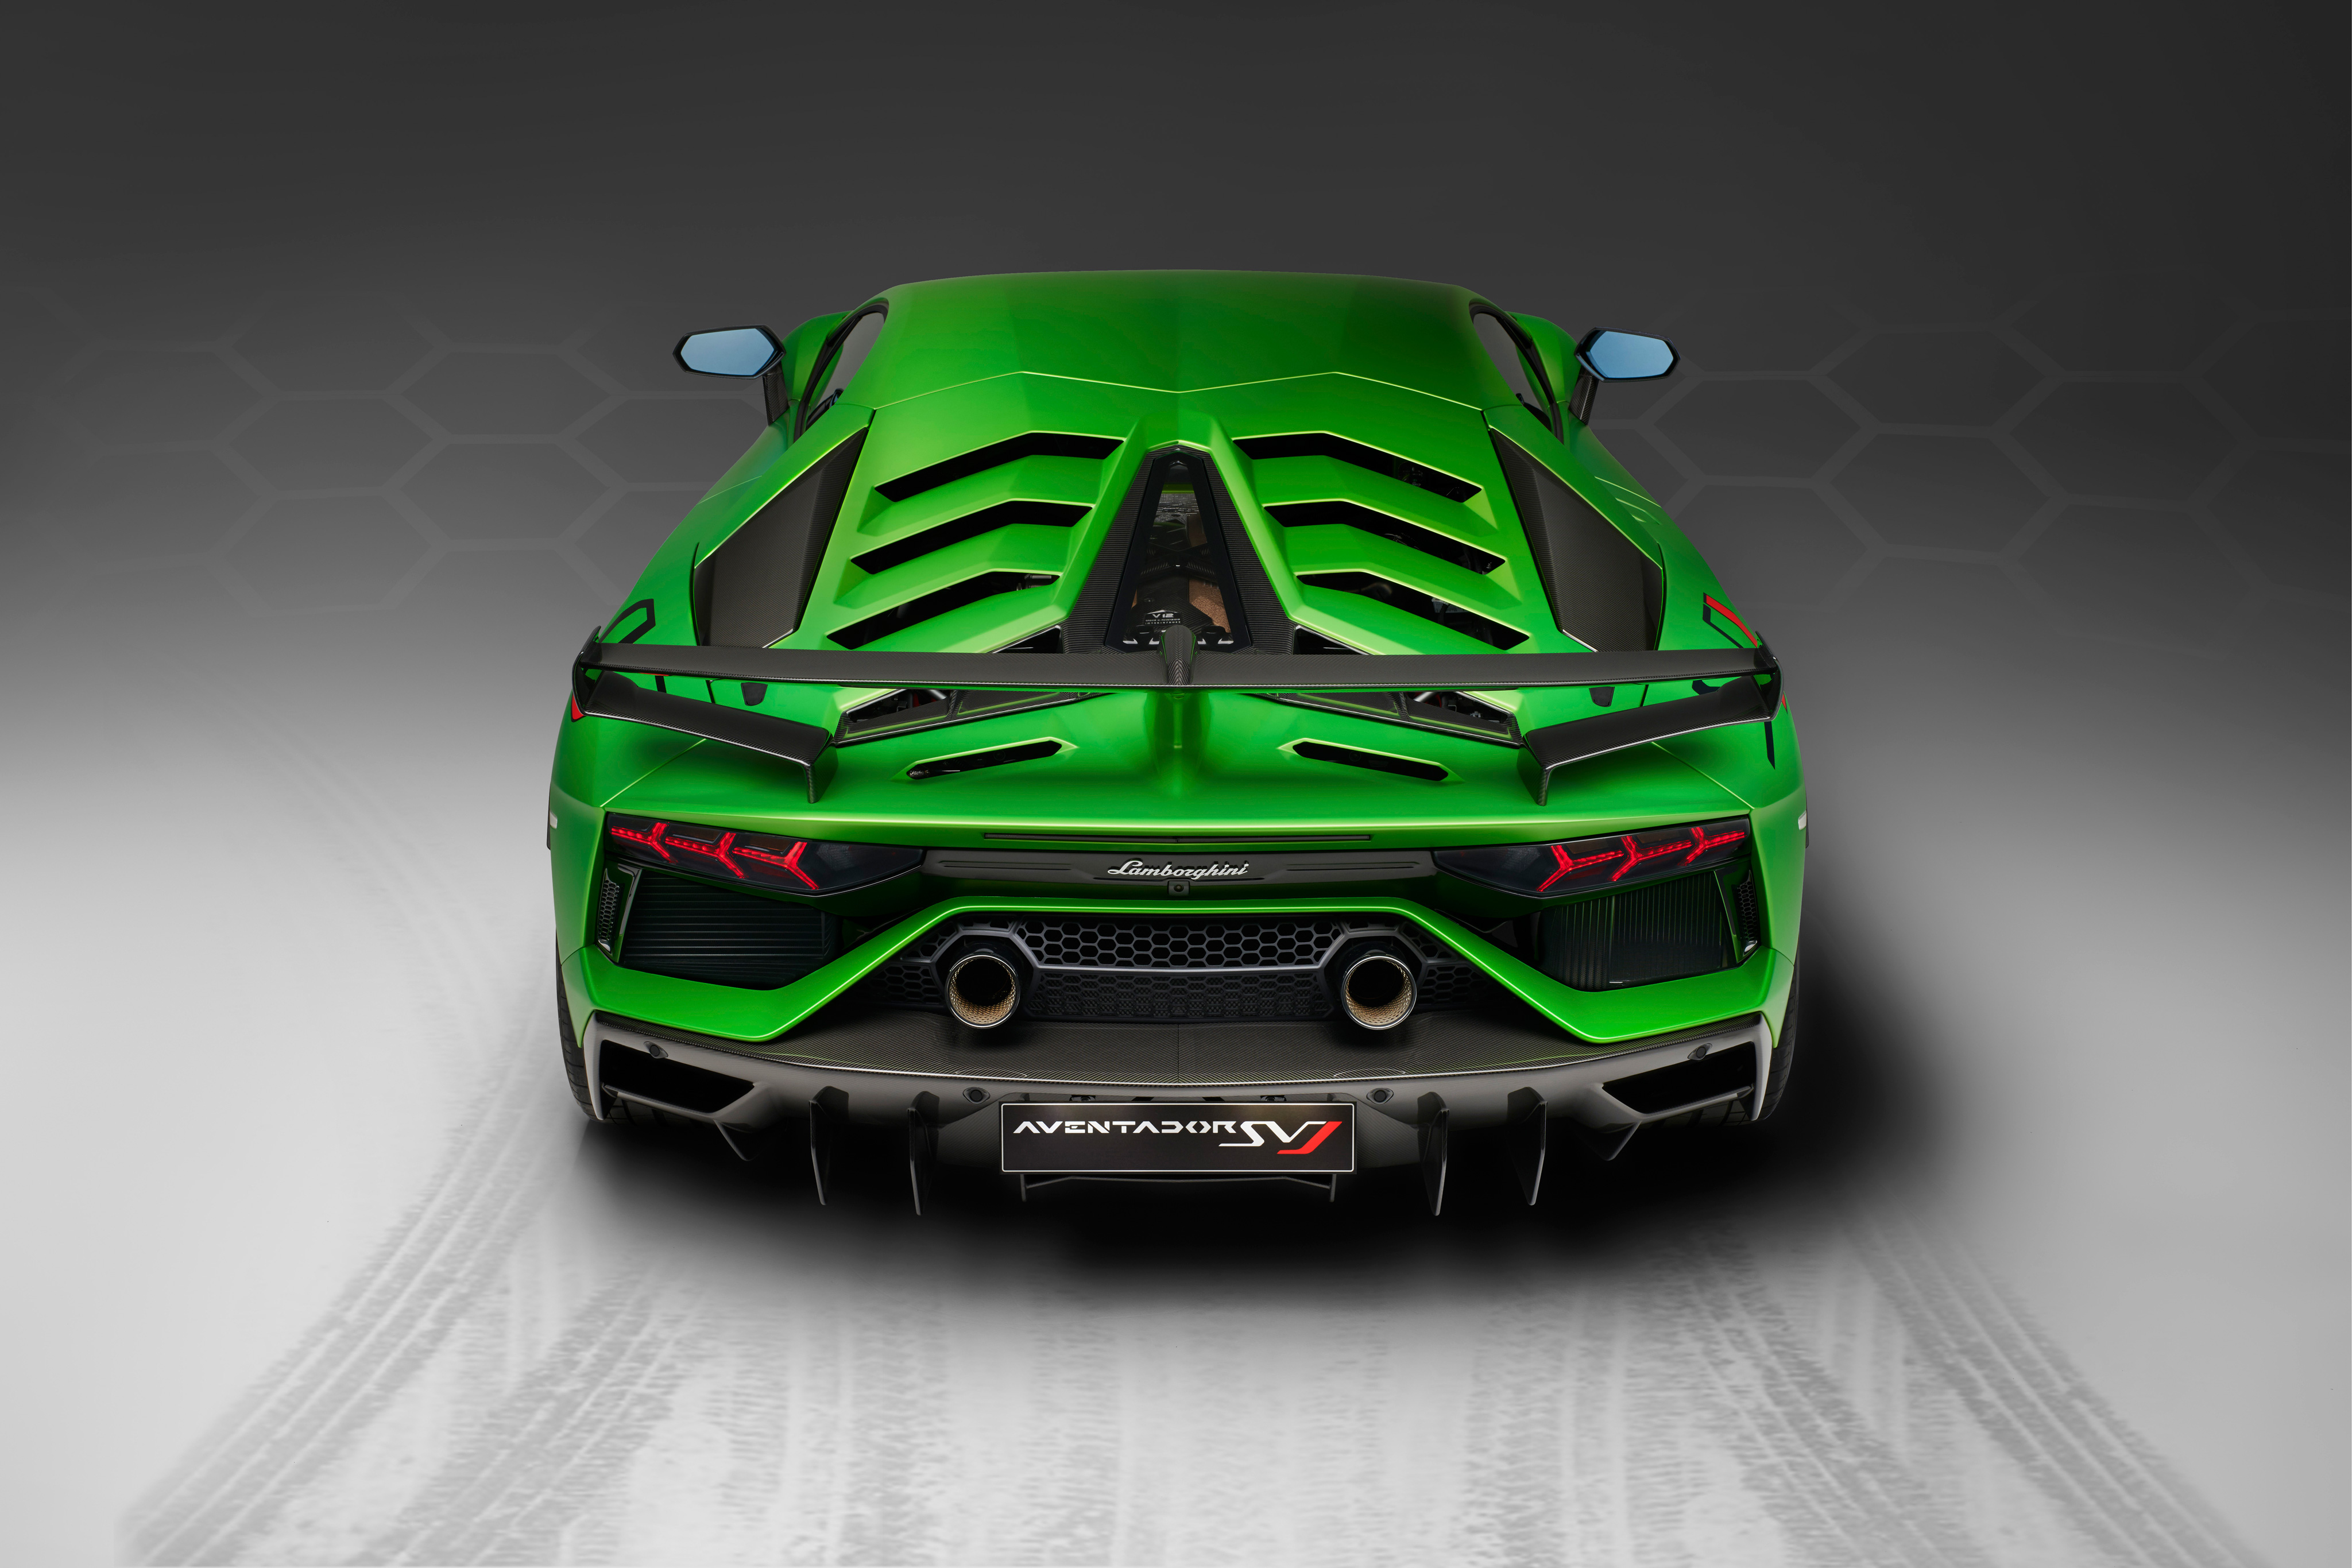 2018 Lamborghini Aventador SVJ Rear, HD Cars, 4k Wallpapers, Images